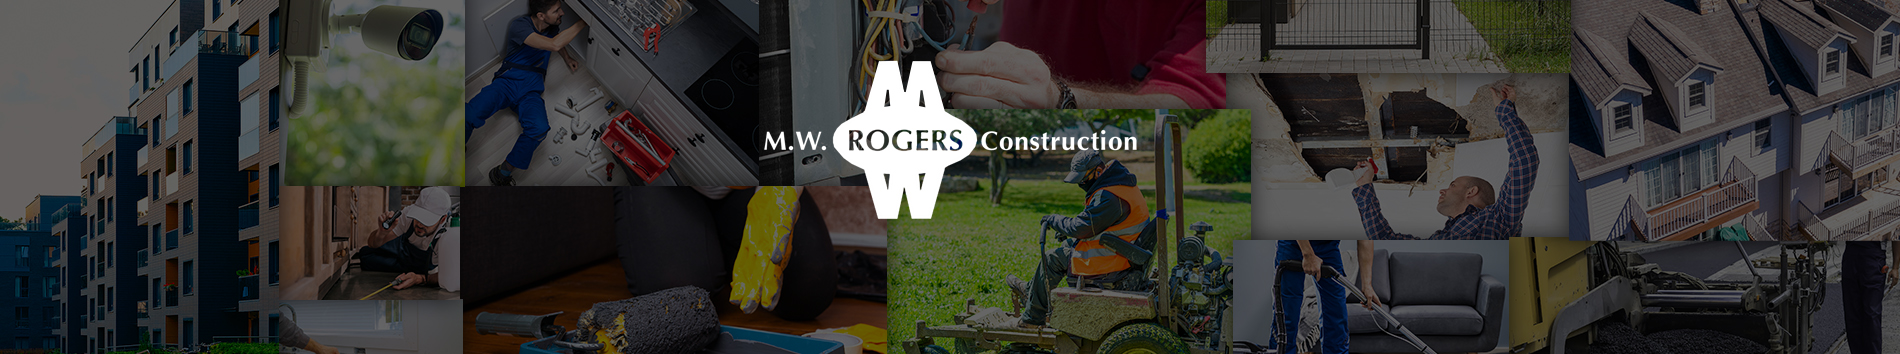 M.W. Rogers Construction, Inc.